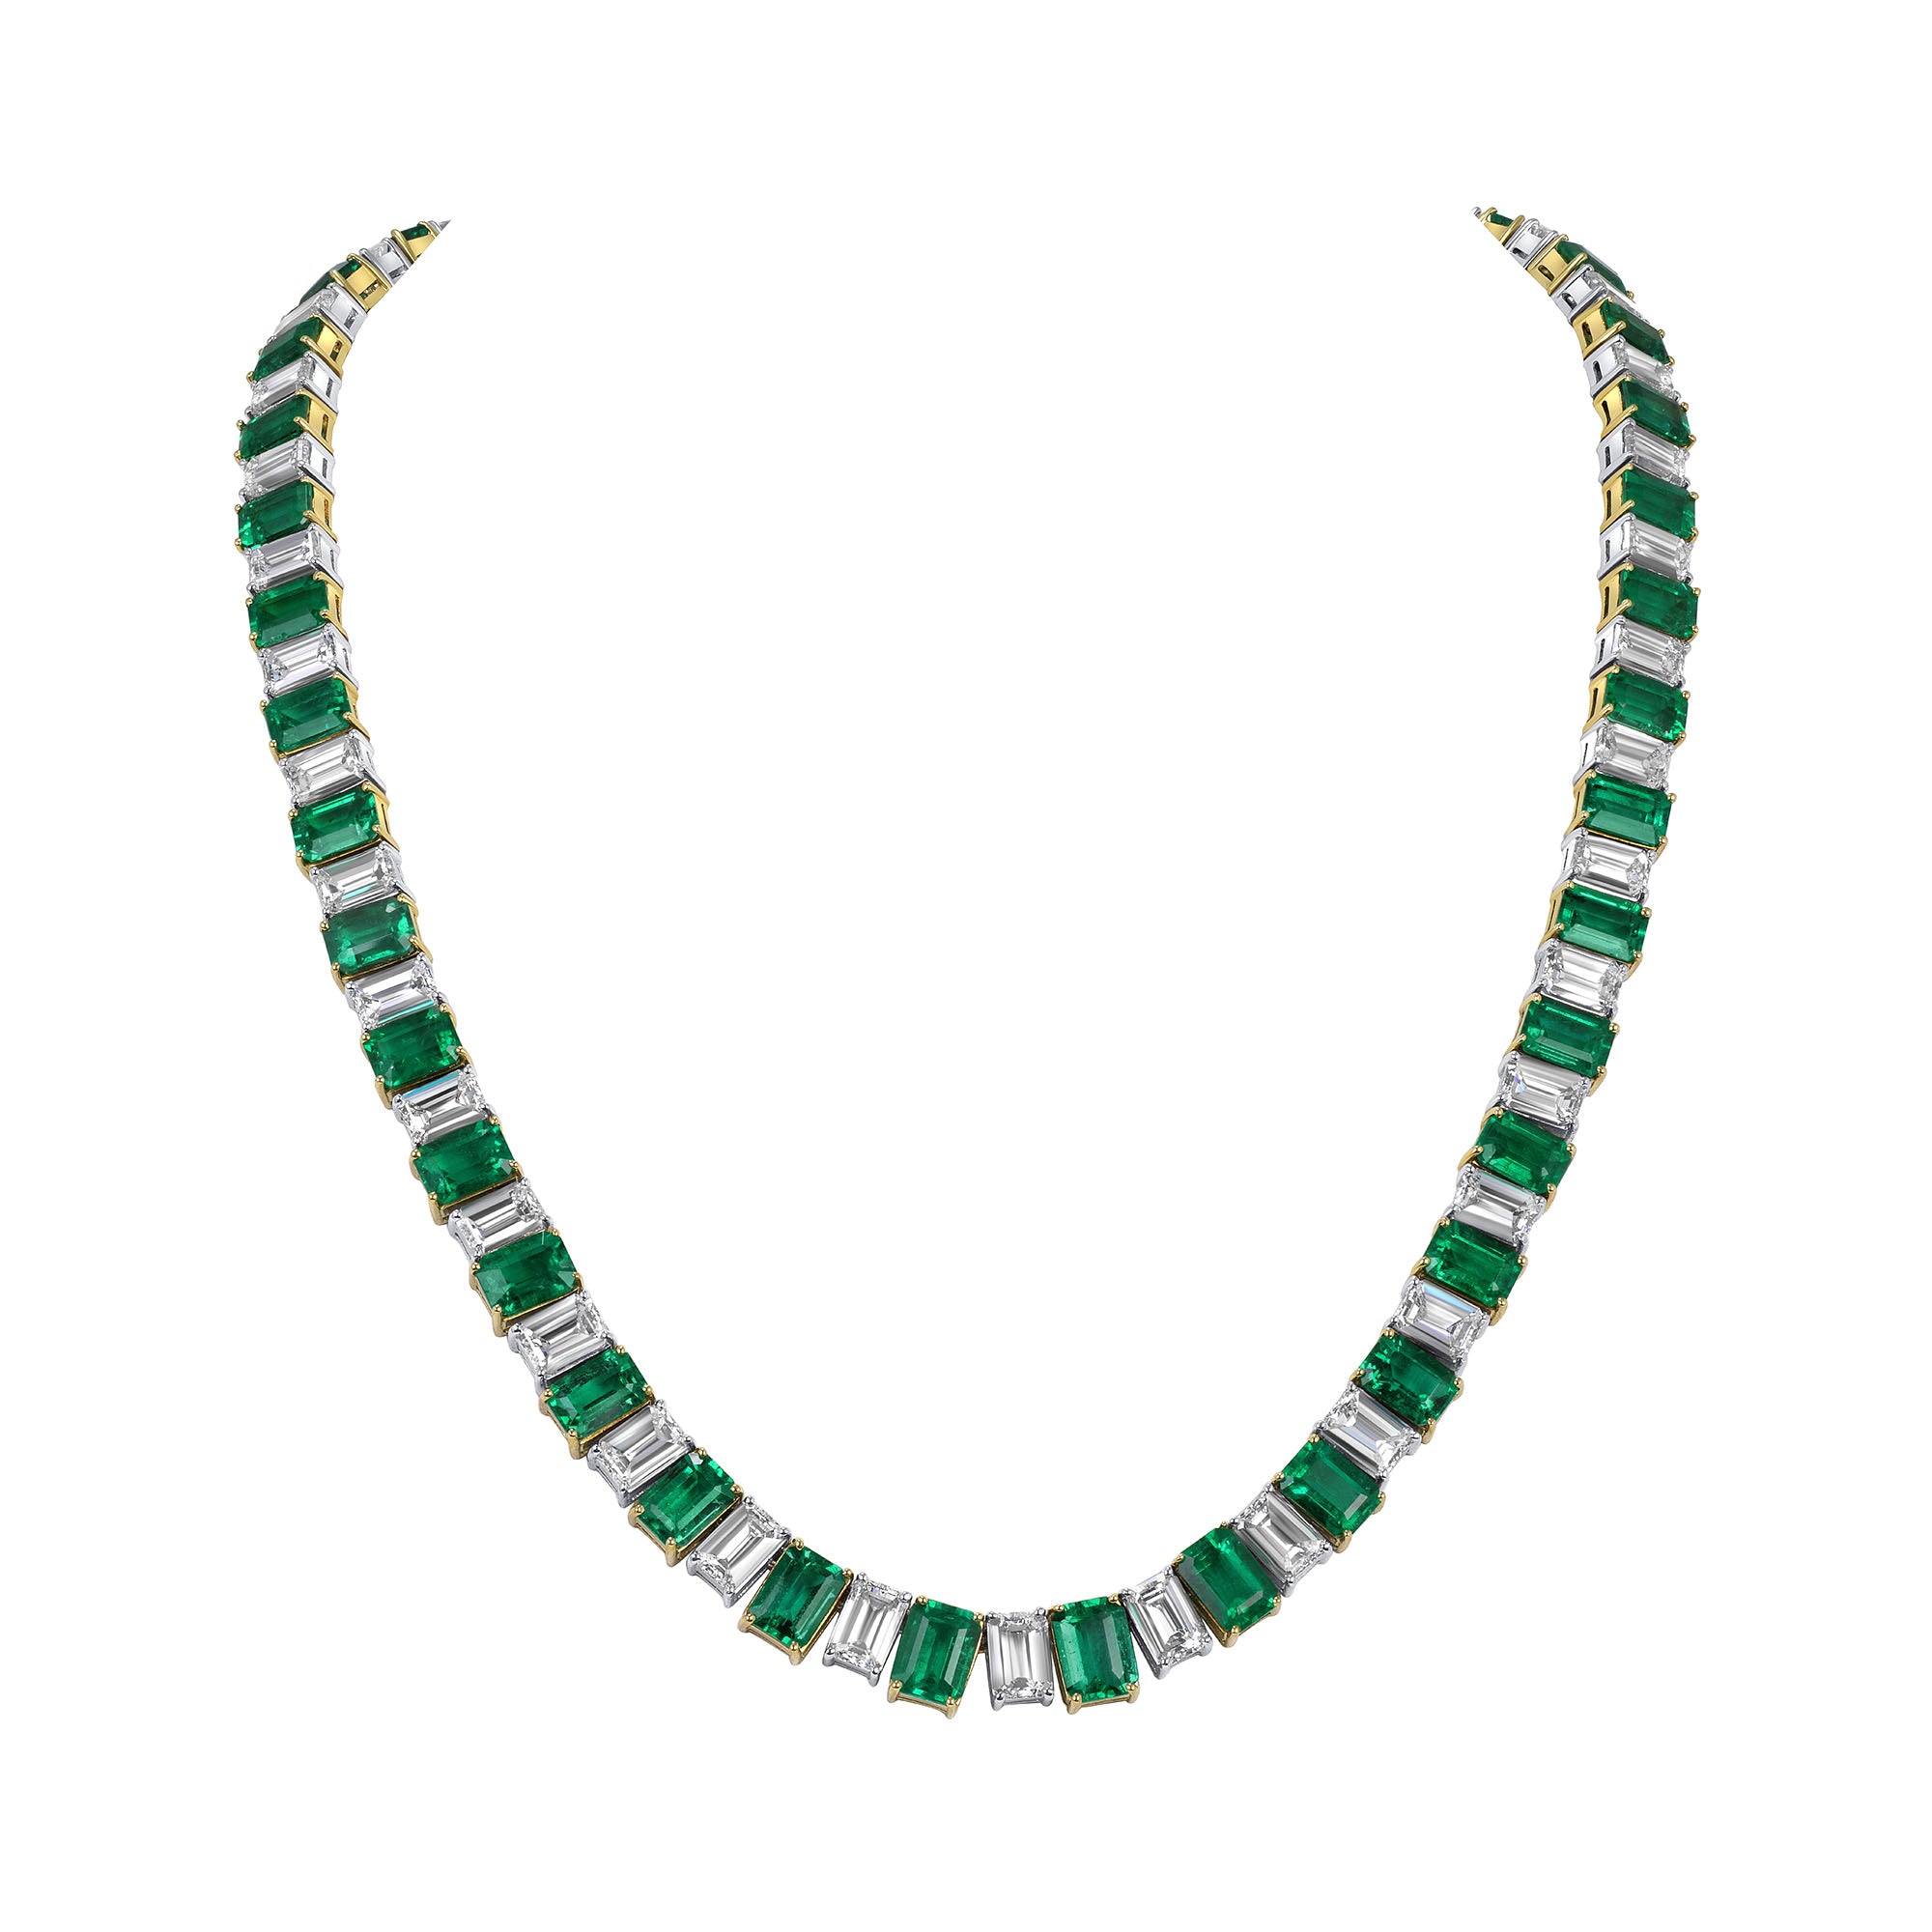 Alternating Cushion Cut Emerald and Emerald Cut Diamond Tennis Necklace in Platinum